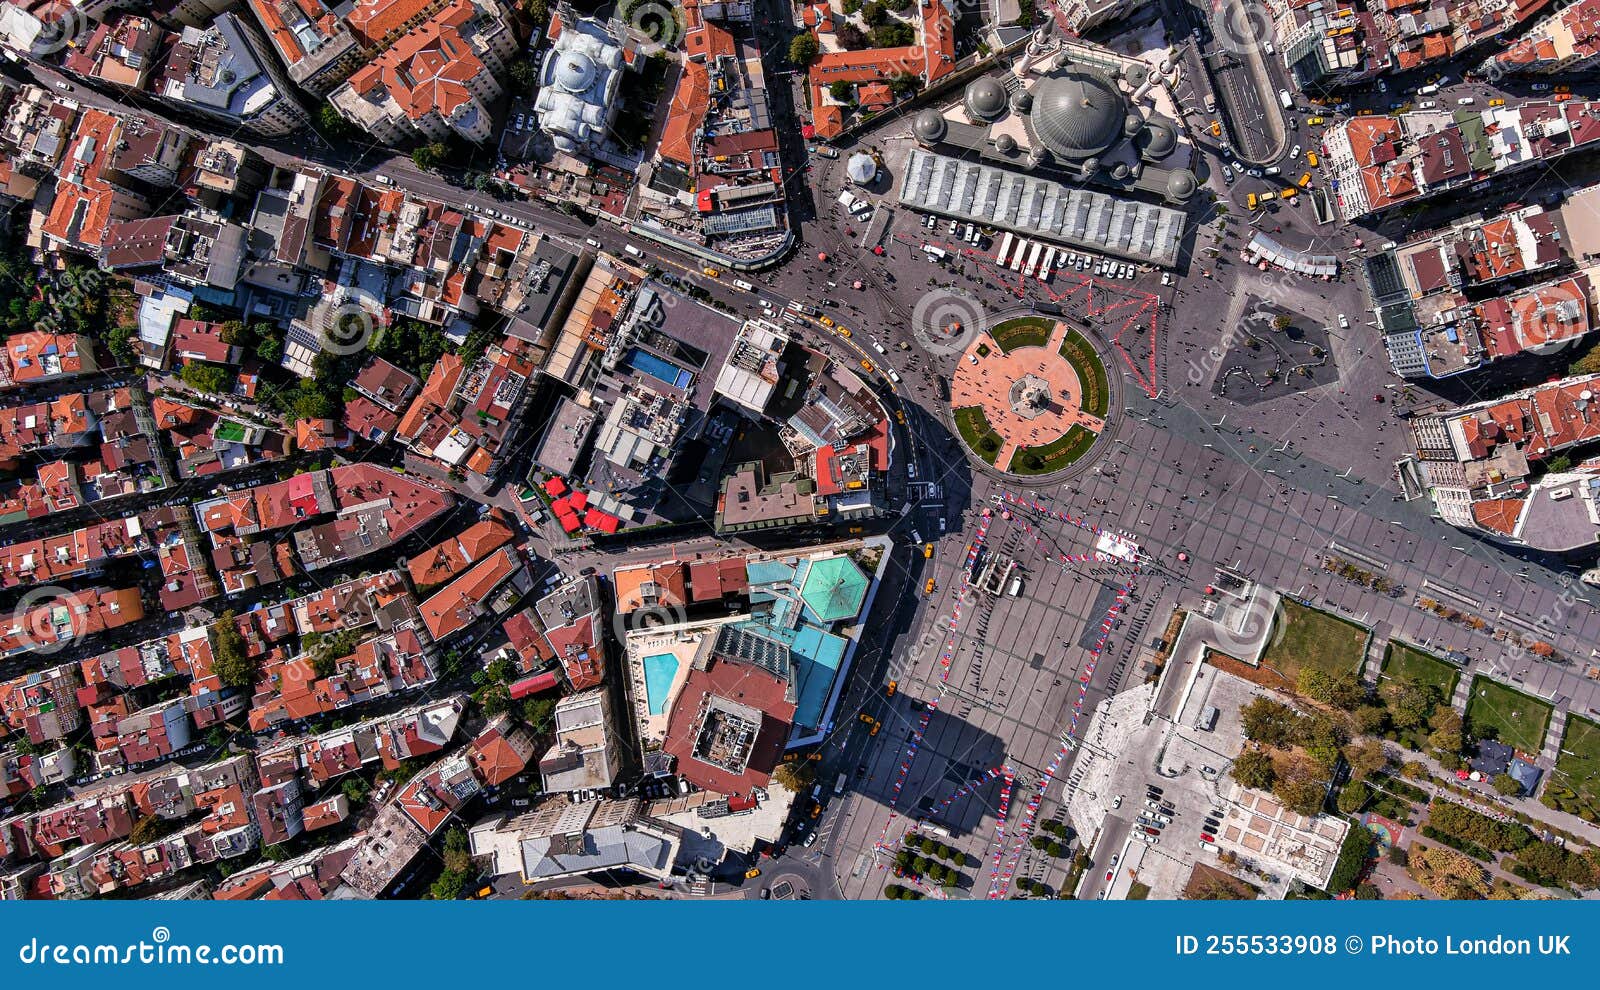 taksim square in beyoglu district of istanbul